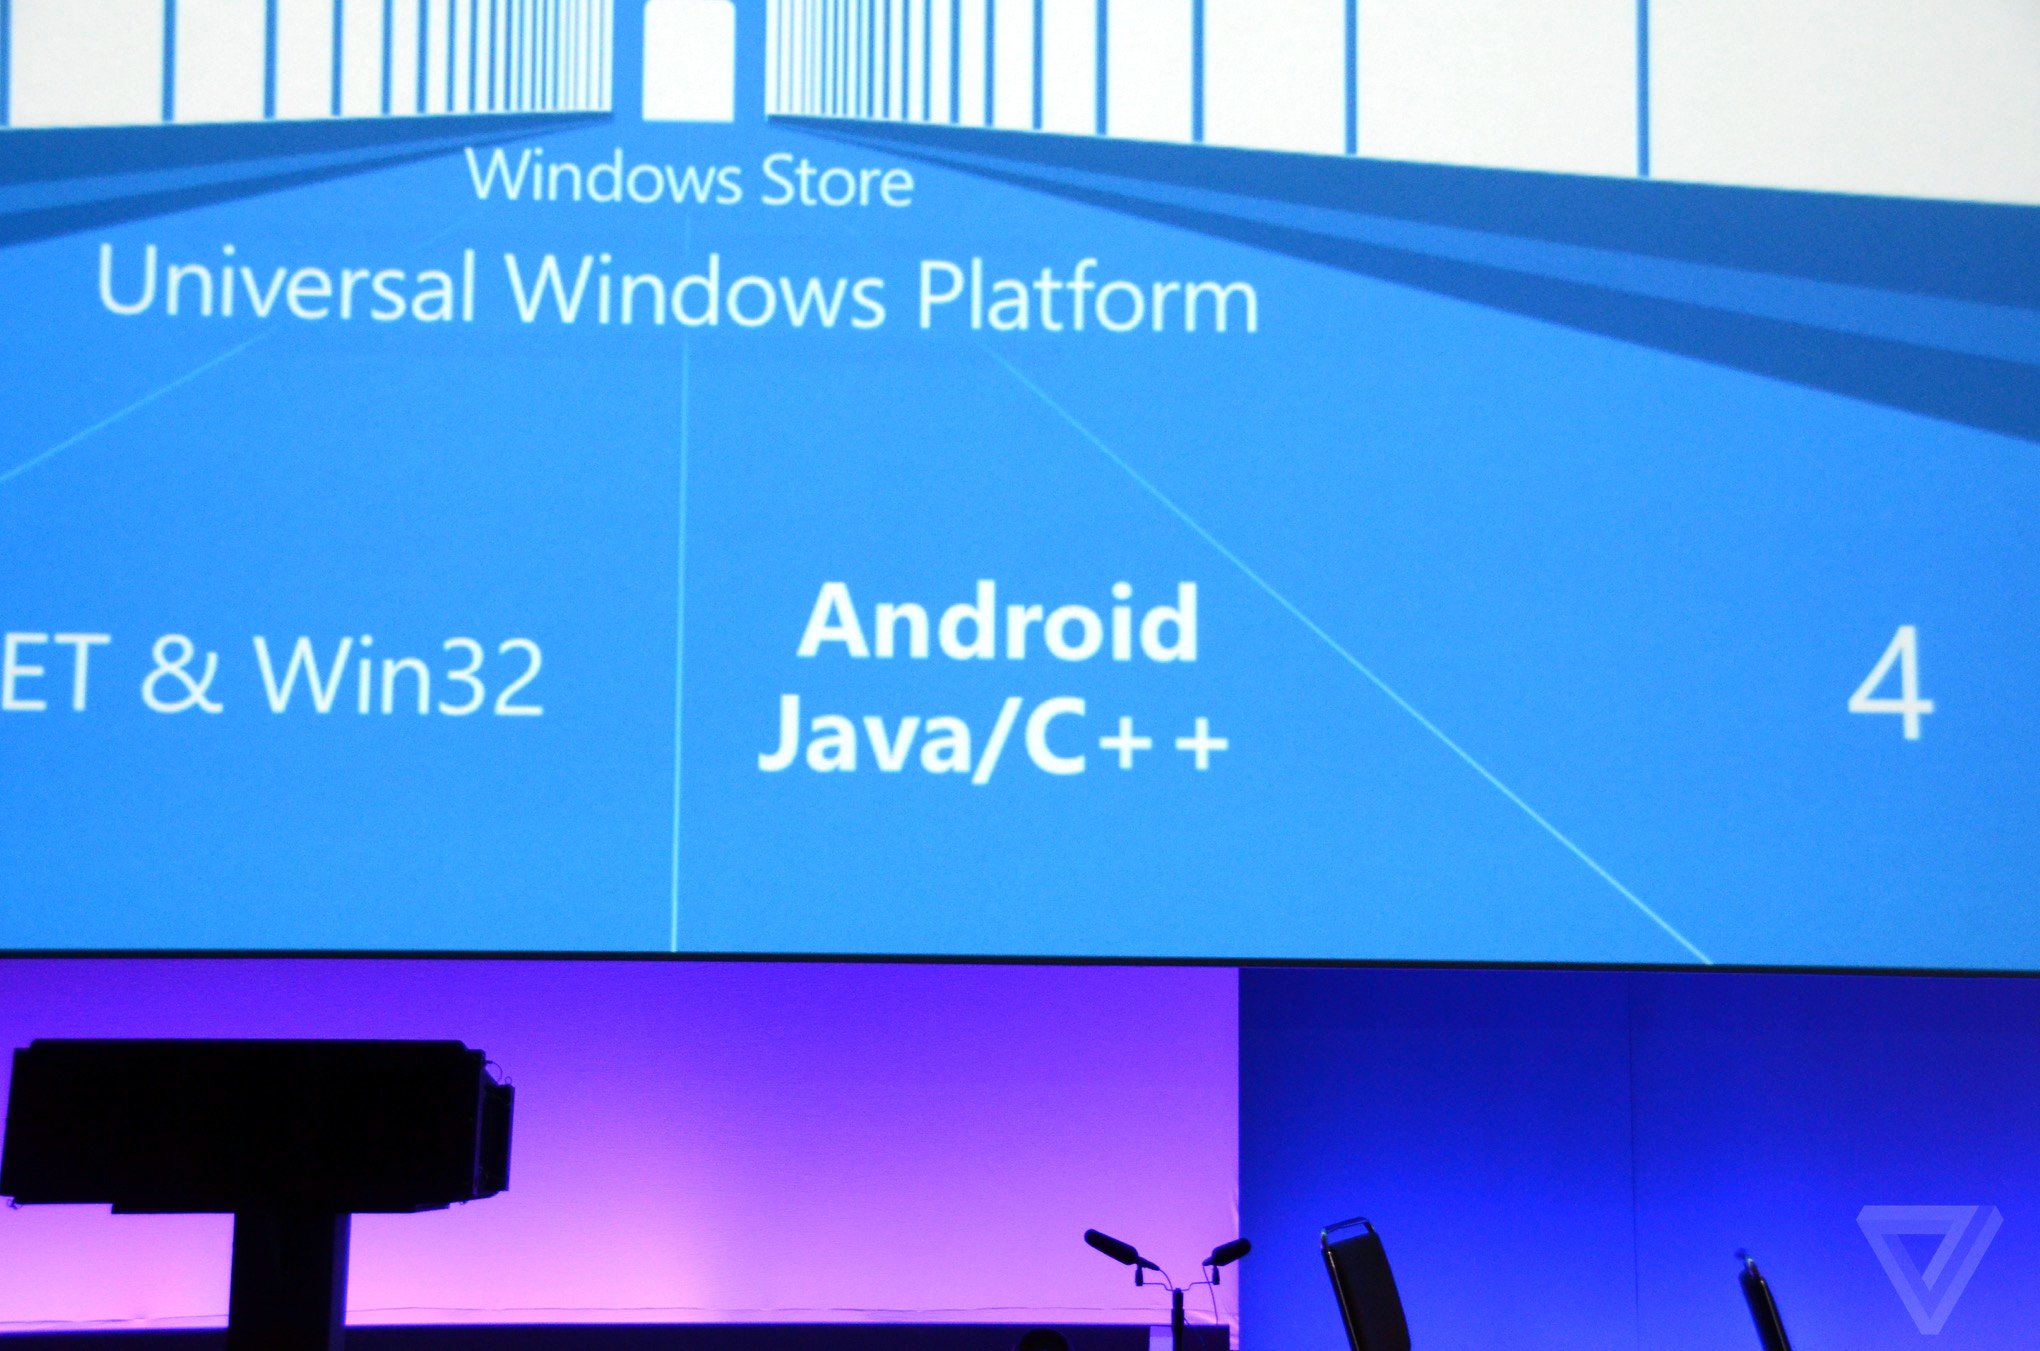 Windows 10 runs Android app